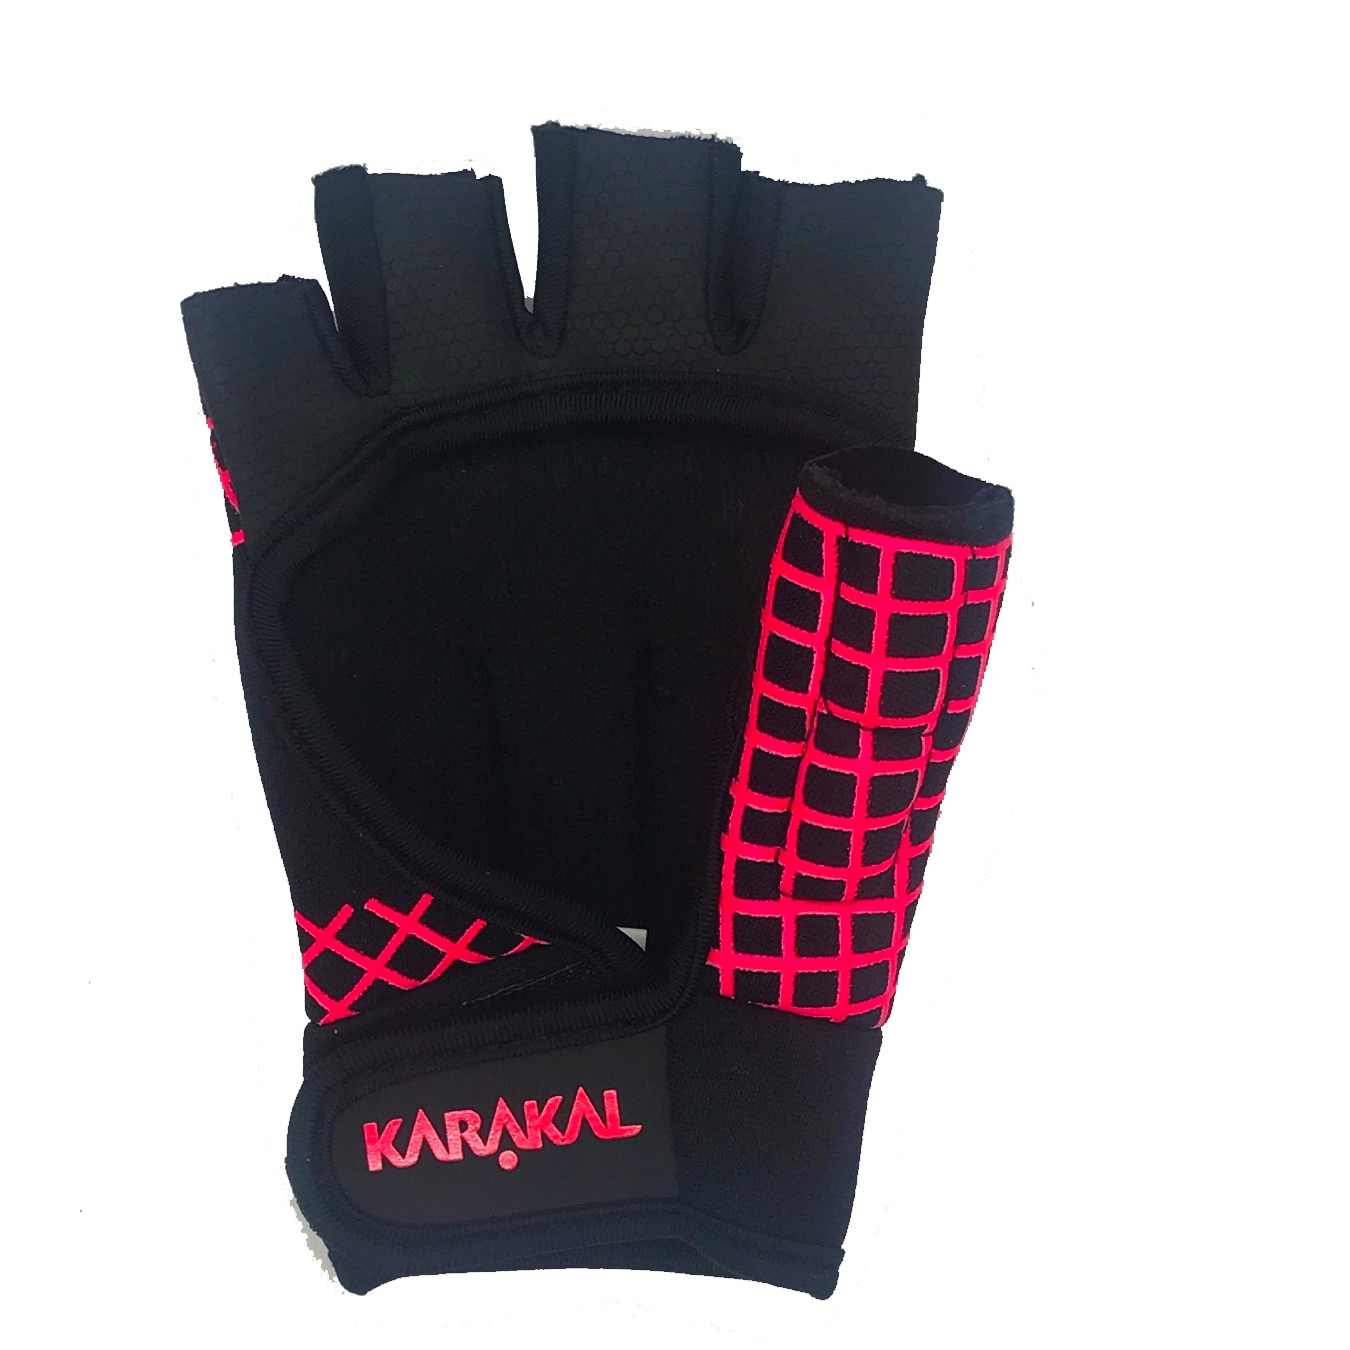 Karakal Pro Hurling Glove Right Hand